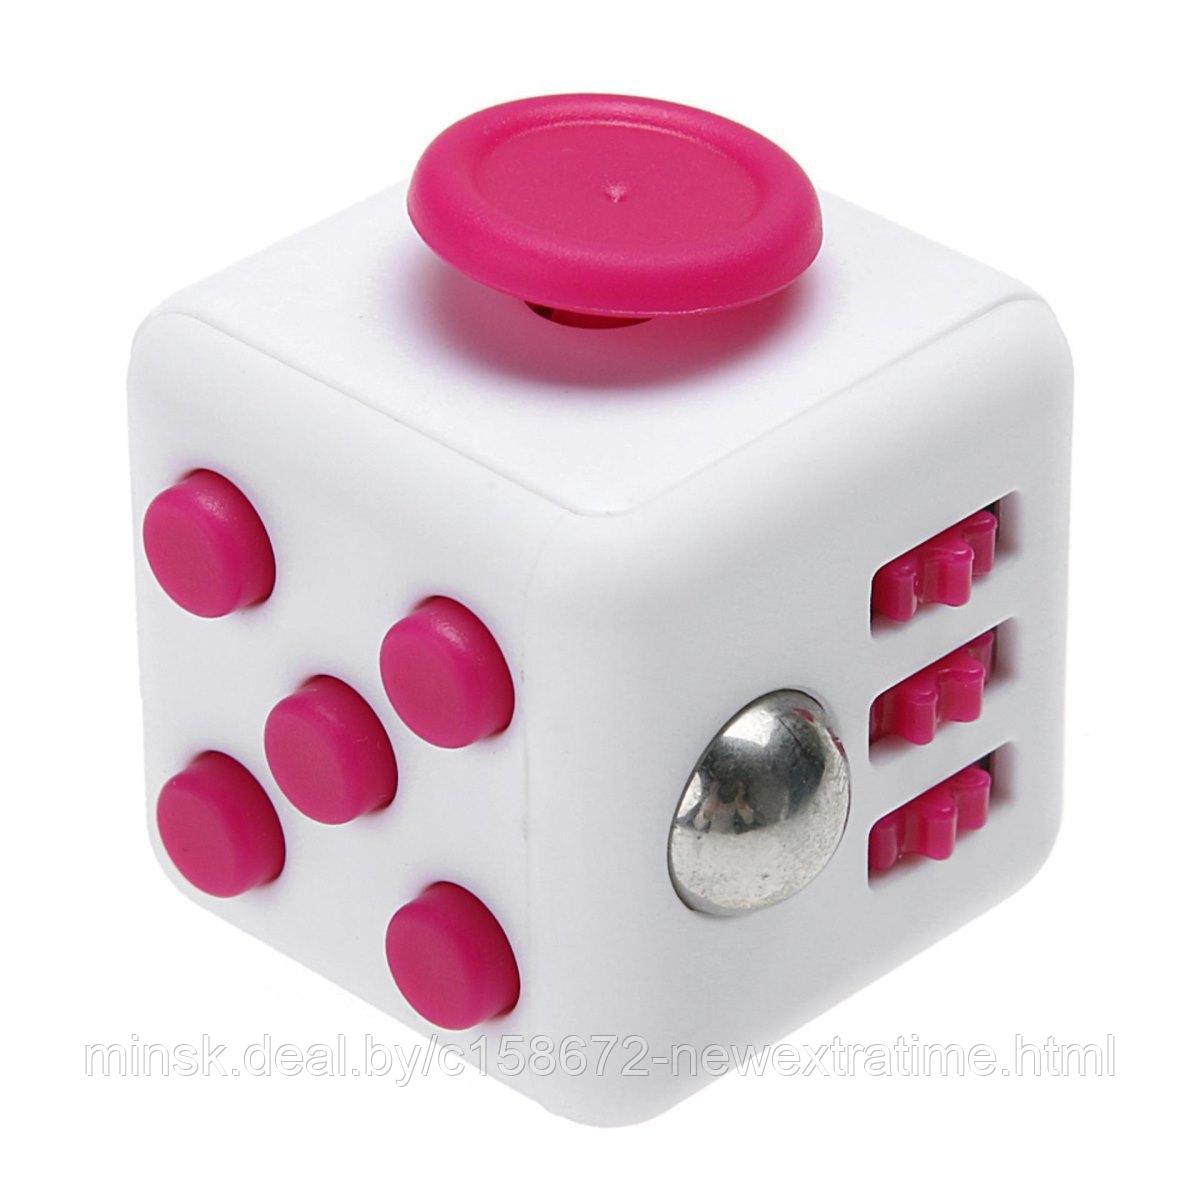 Антистресс вайлдберриз. Фиджет куб, антистресс игрушка. Кубик Fidget Cube. Антистрессовый кубик Fidget Cube. Fidget Cube 1 Toy т10664.